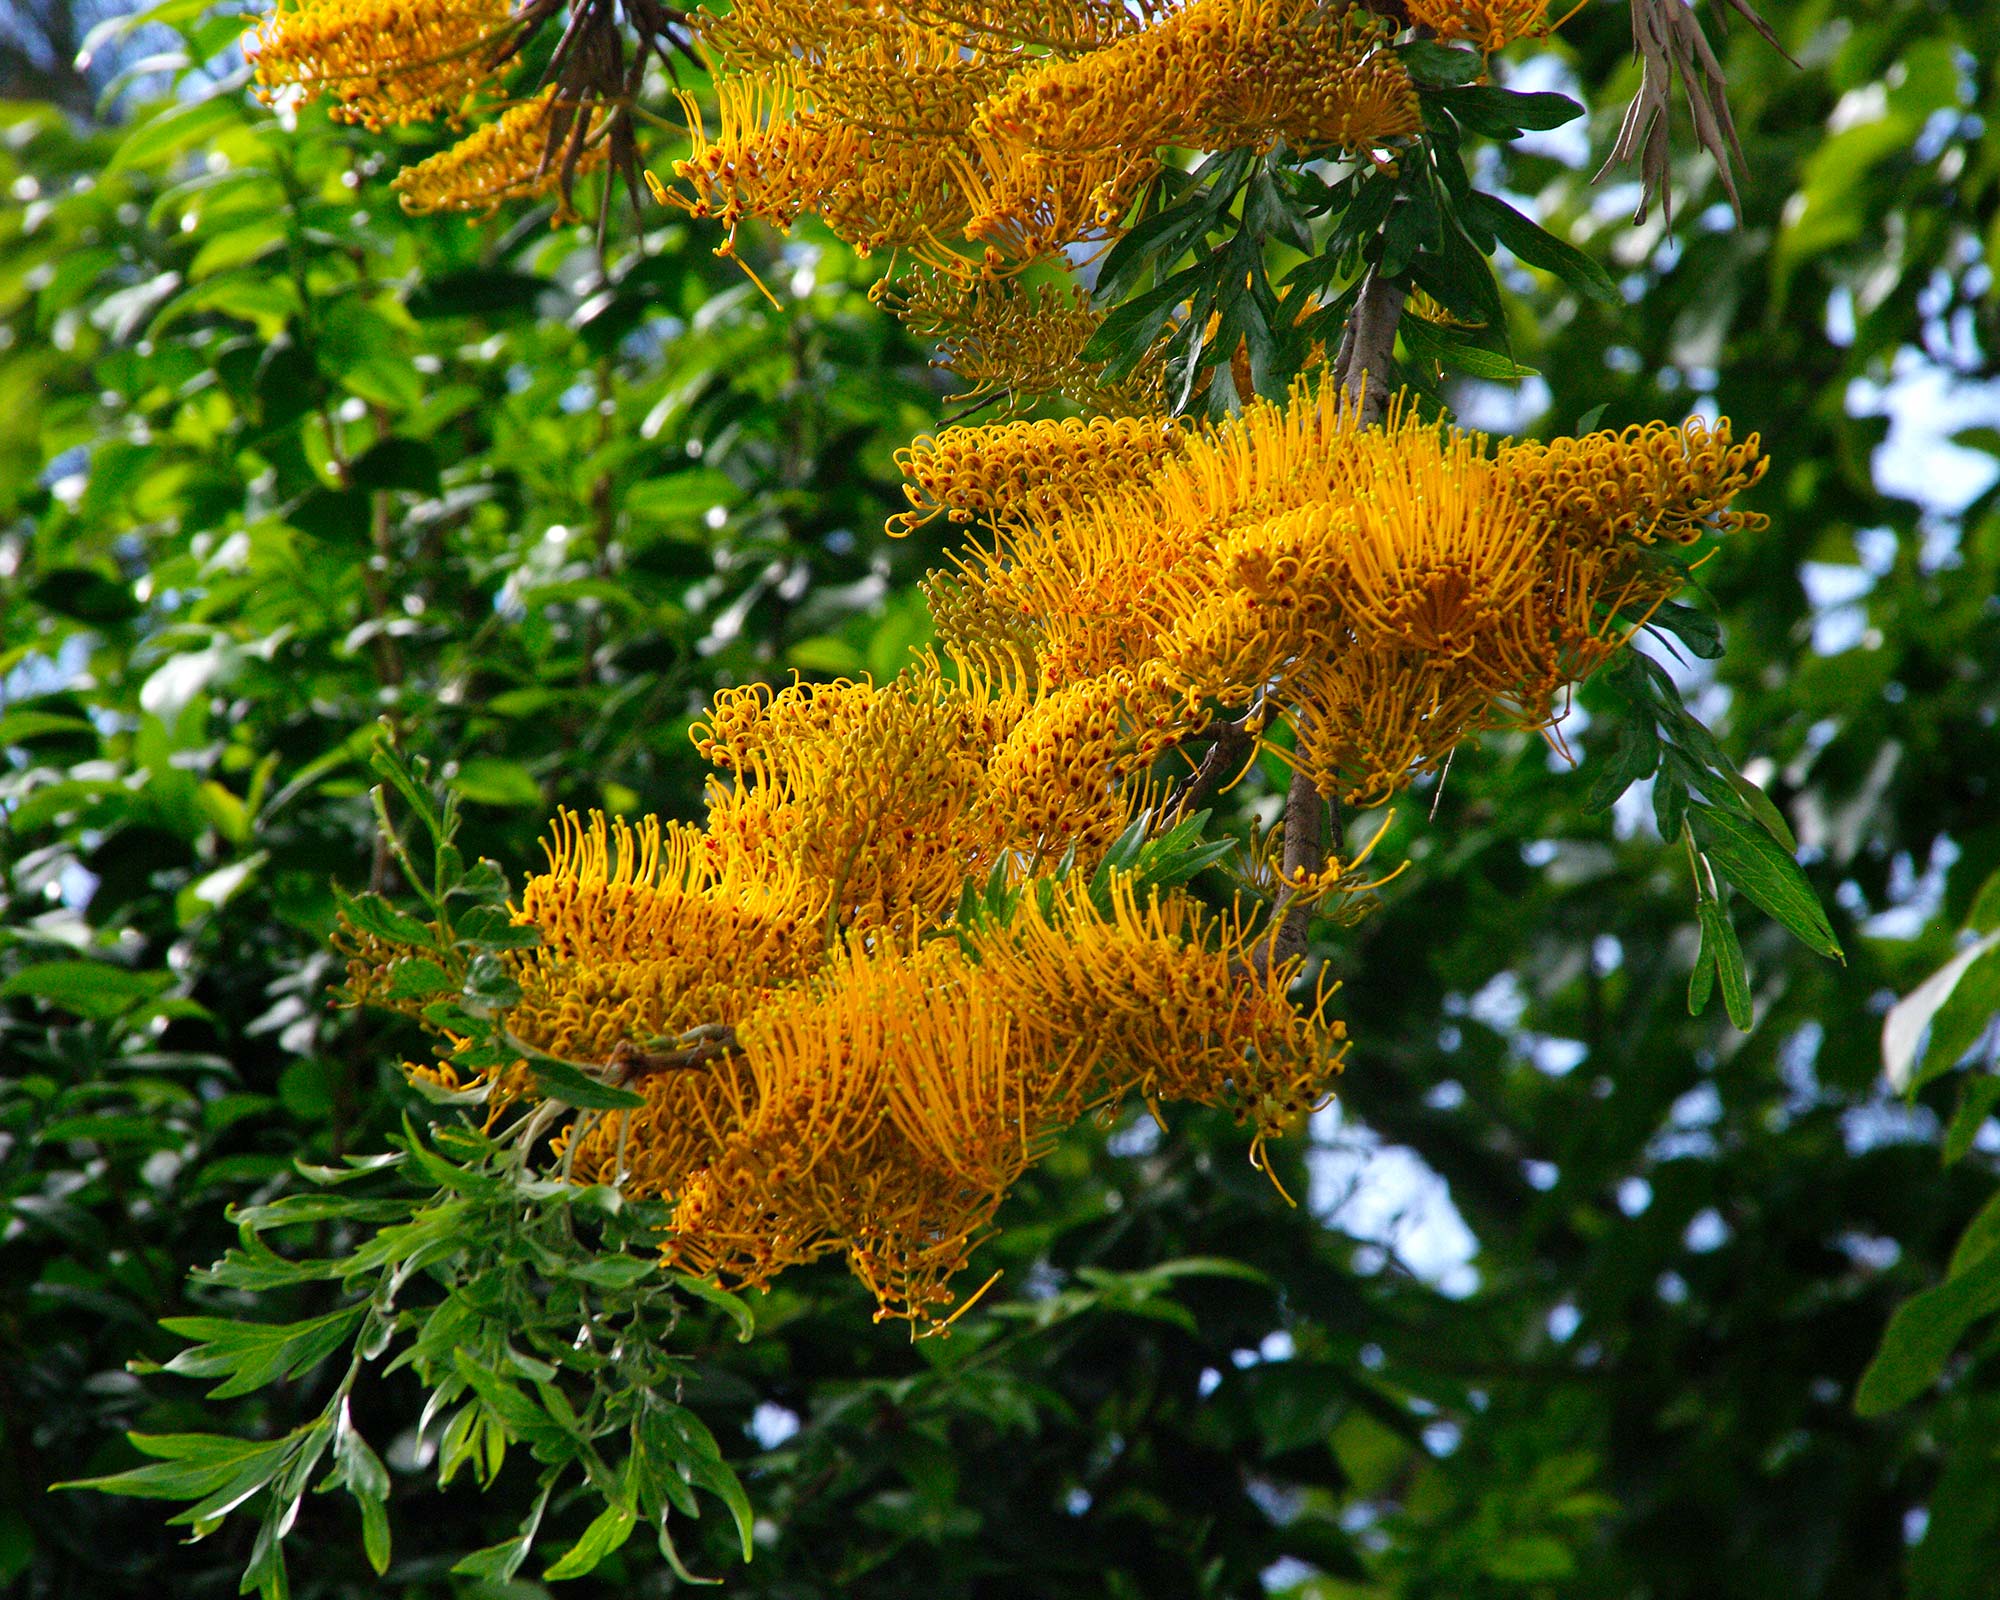 Grevillea robusta - golden flower in spring